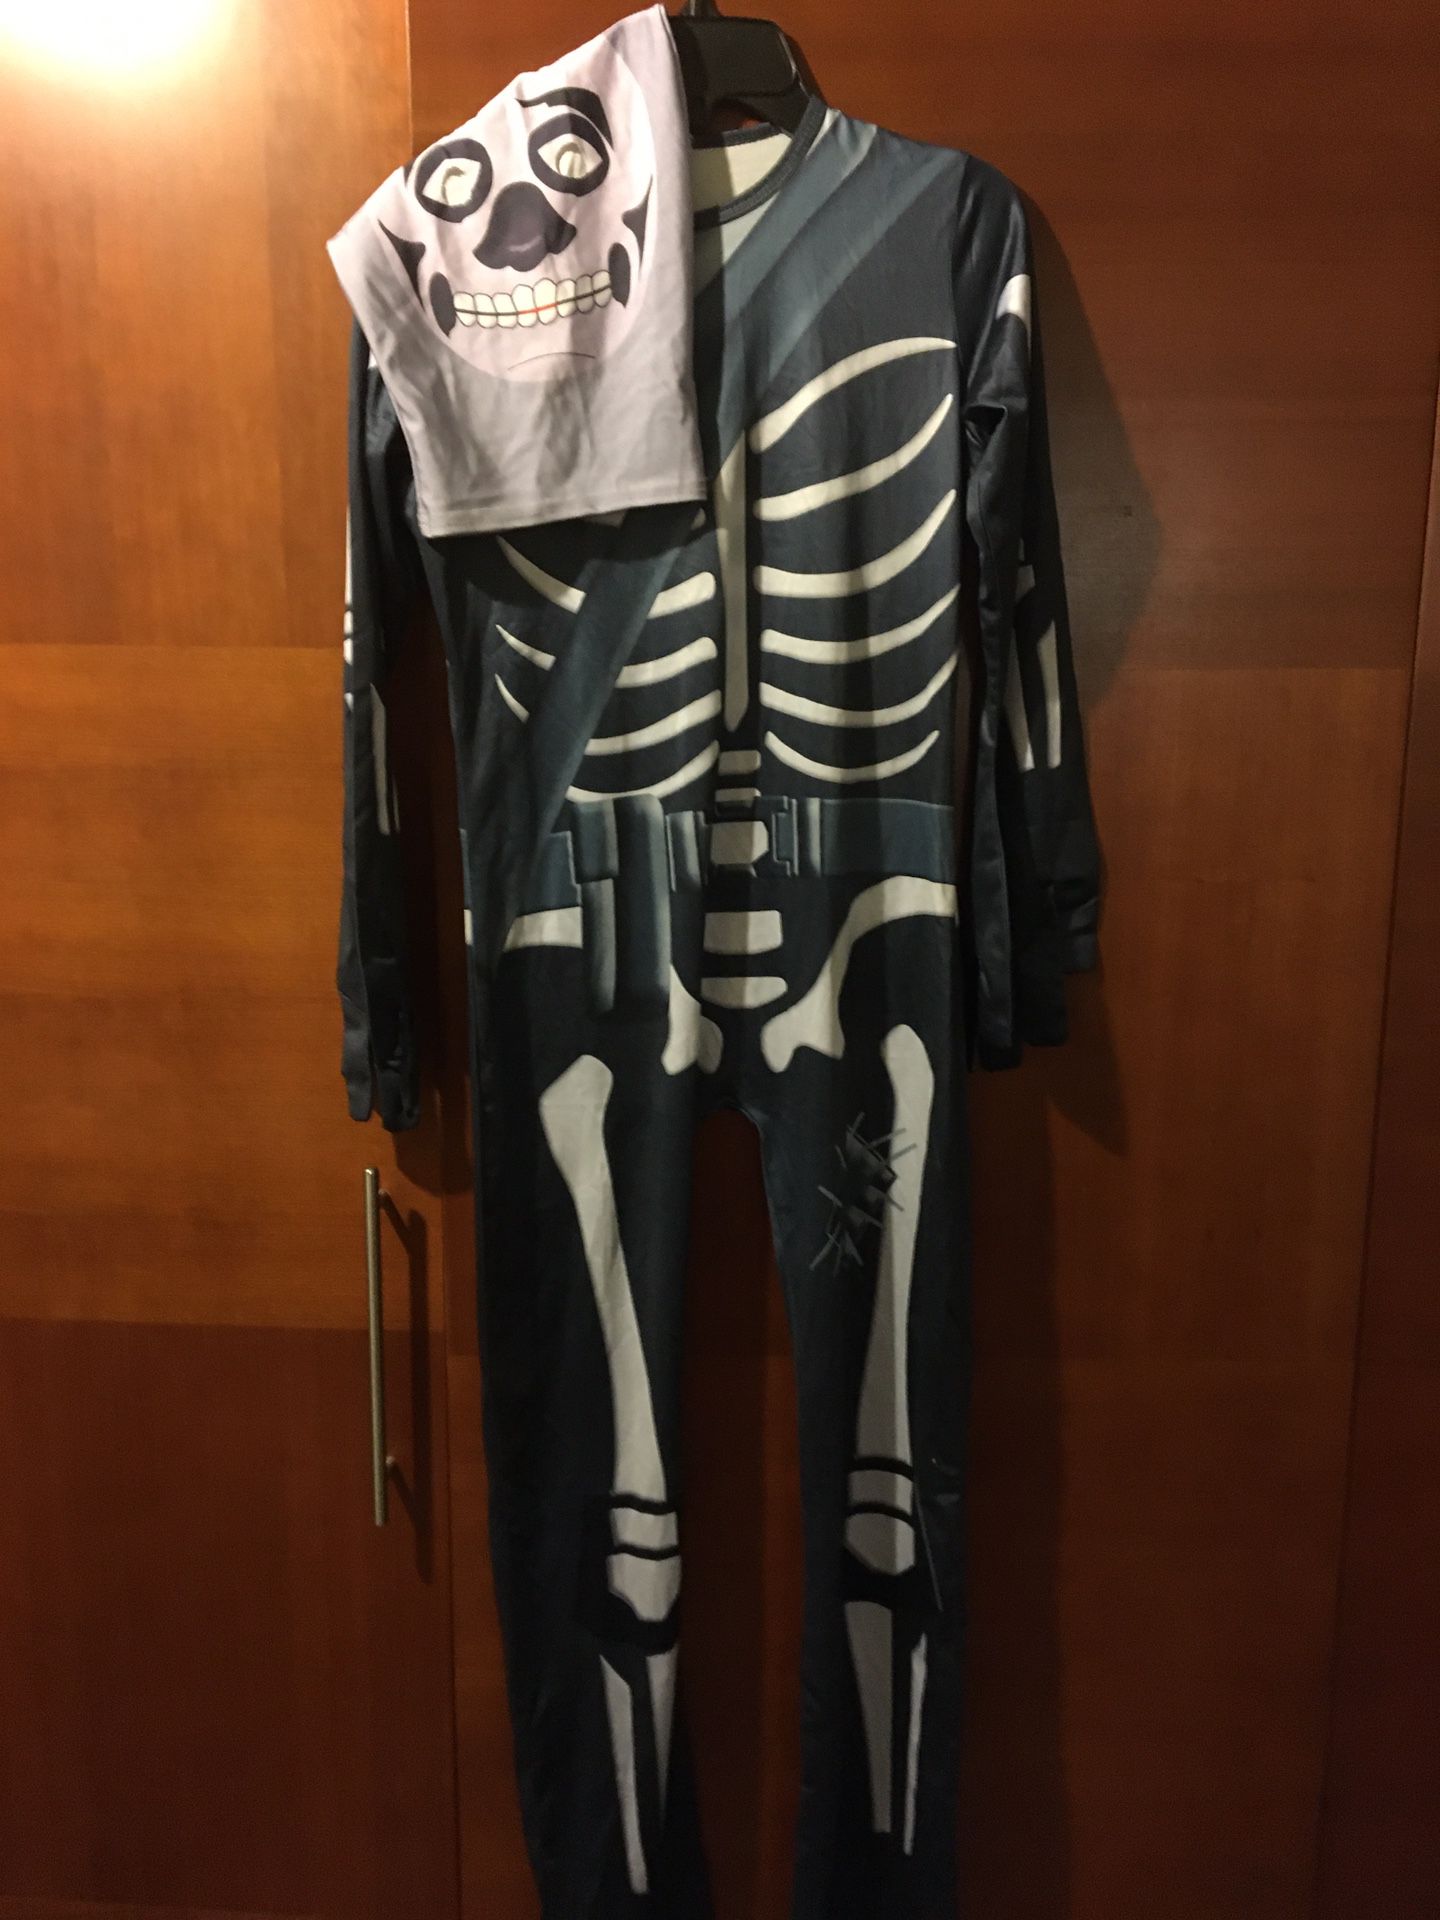 Kids Skeleton Costumes Size XL